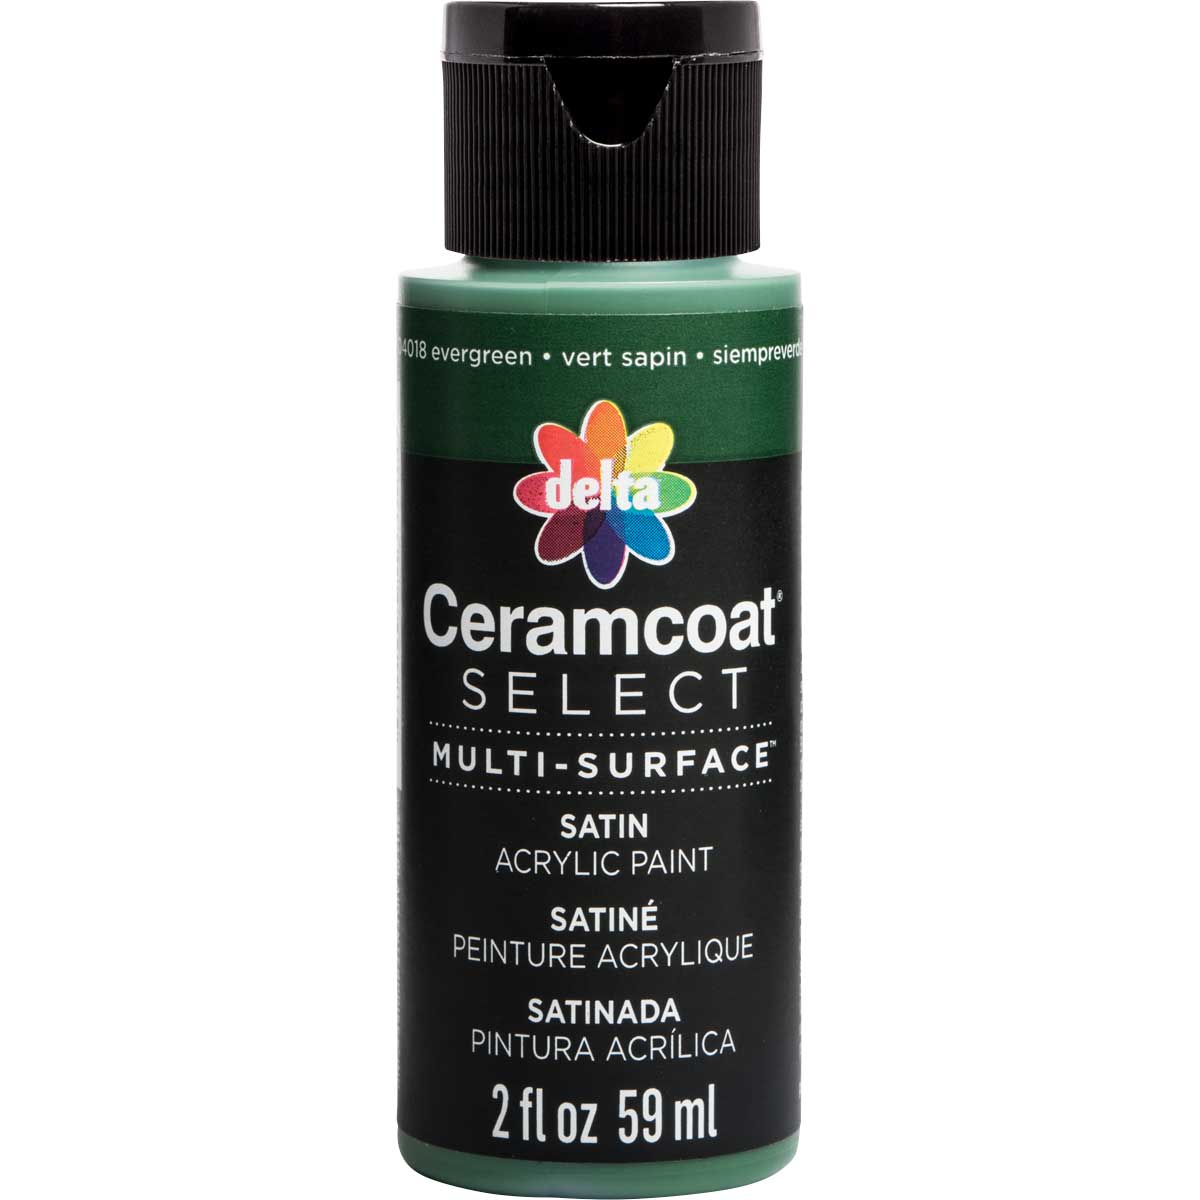 Delta Ceramcoat ® Select Multi-Surface Acrylic Paint - Satin - Evergreen, 2 oz. - 04018